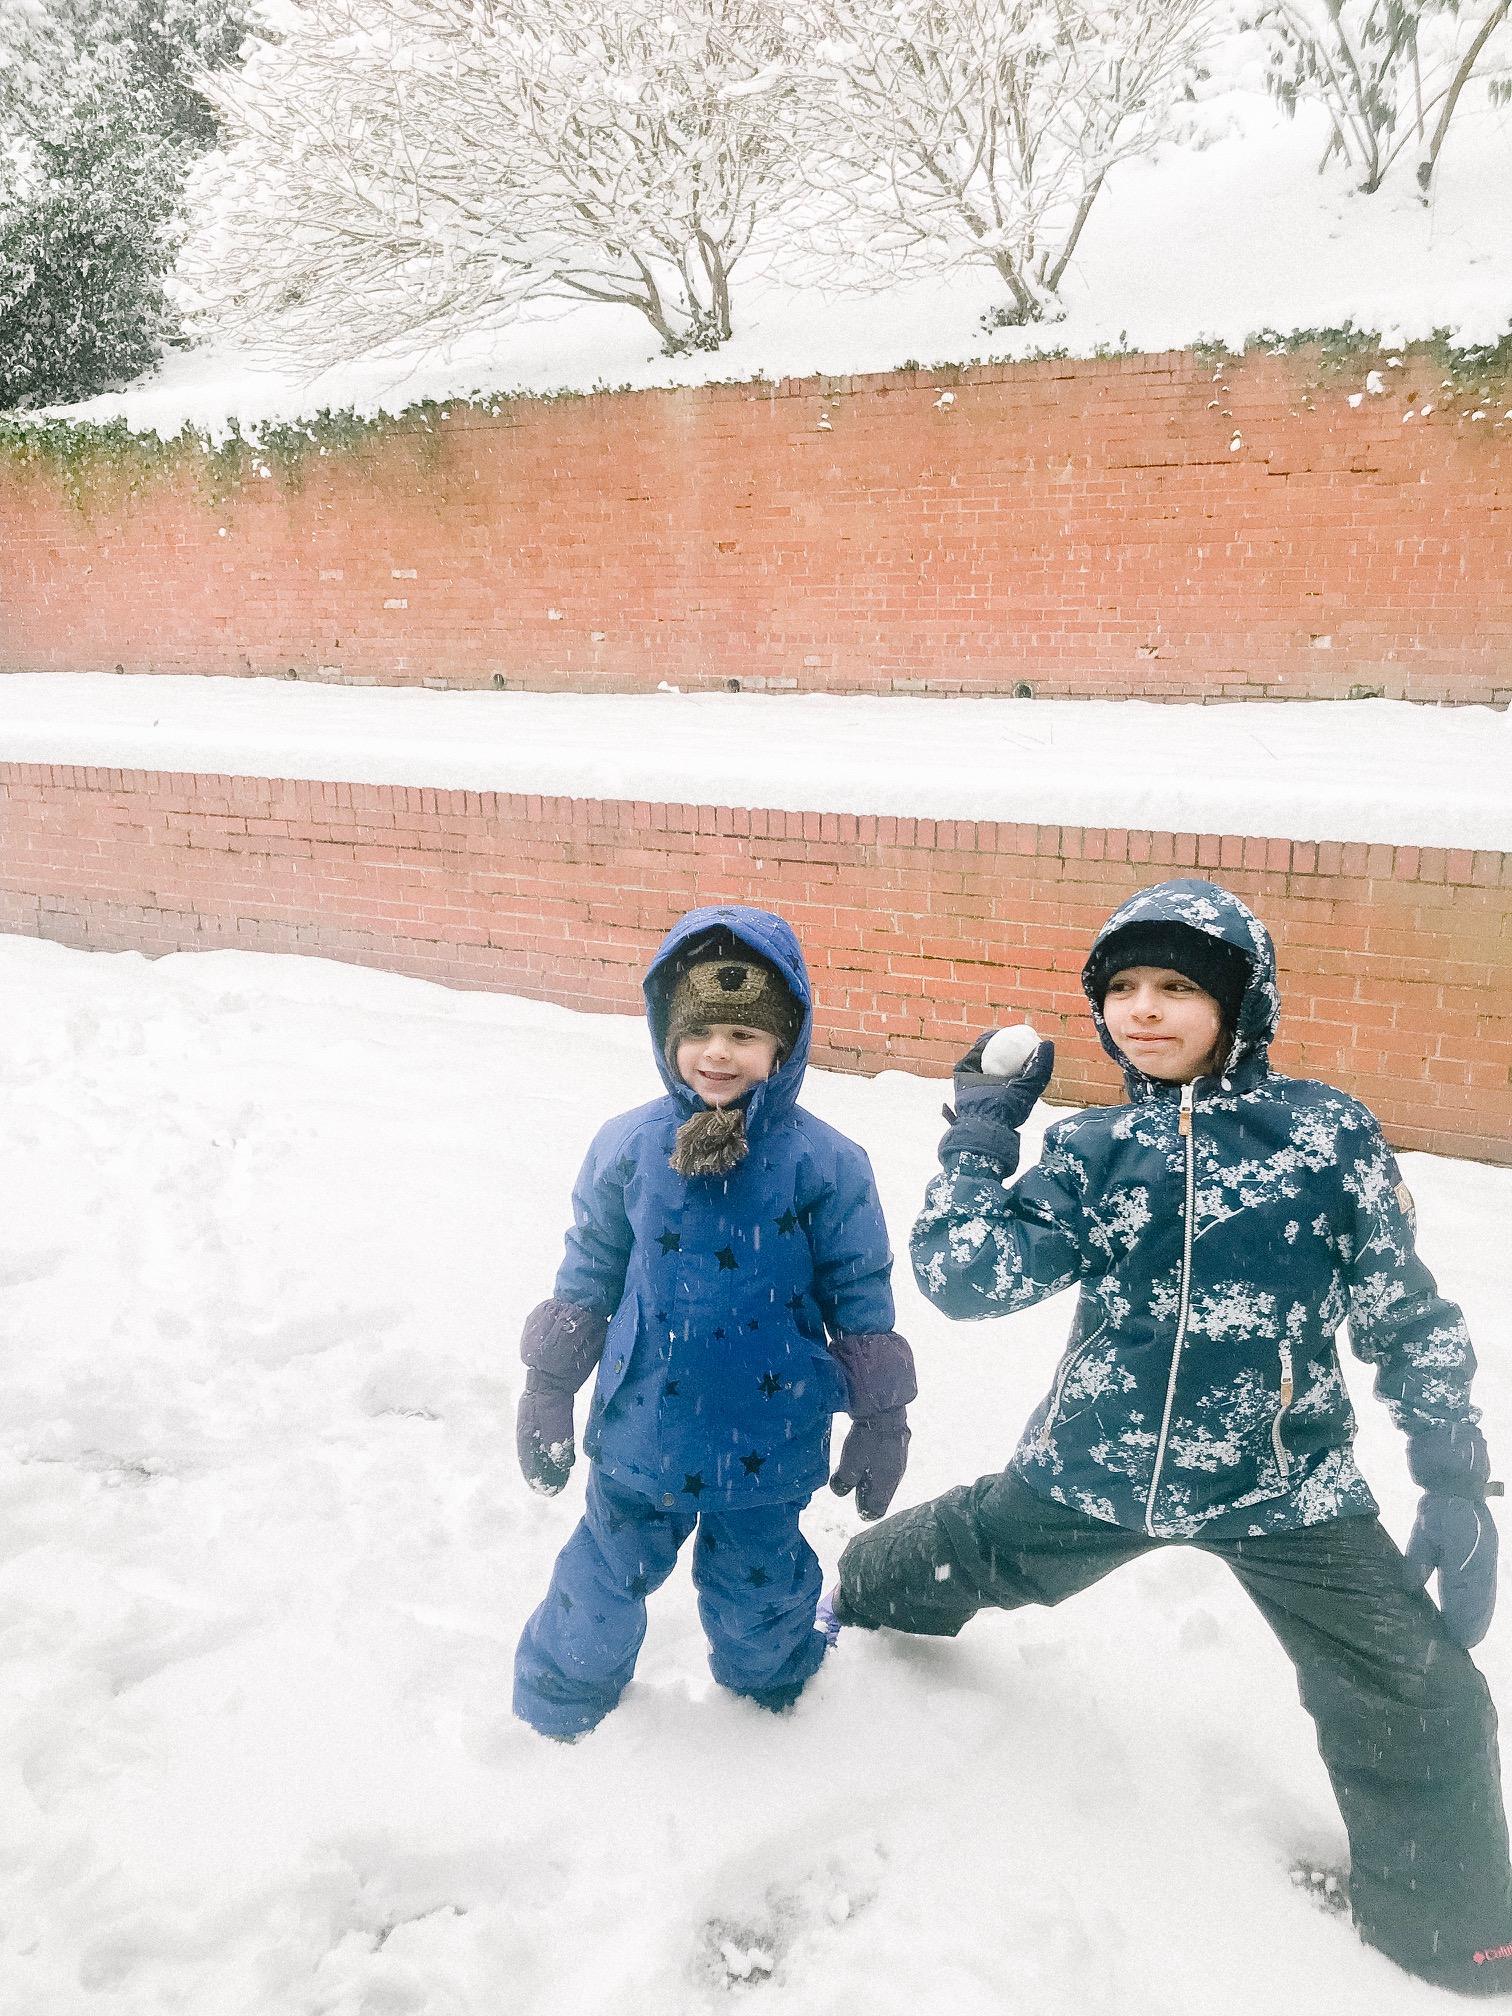 Kids and snowballs in Washington DC winter.